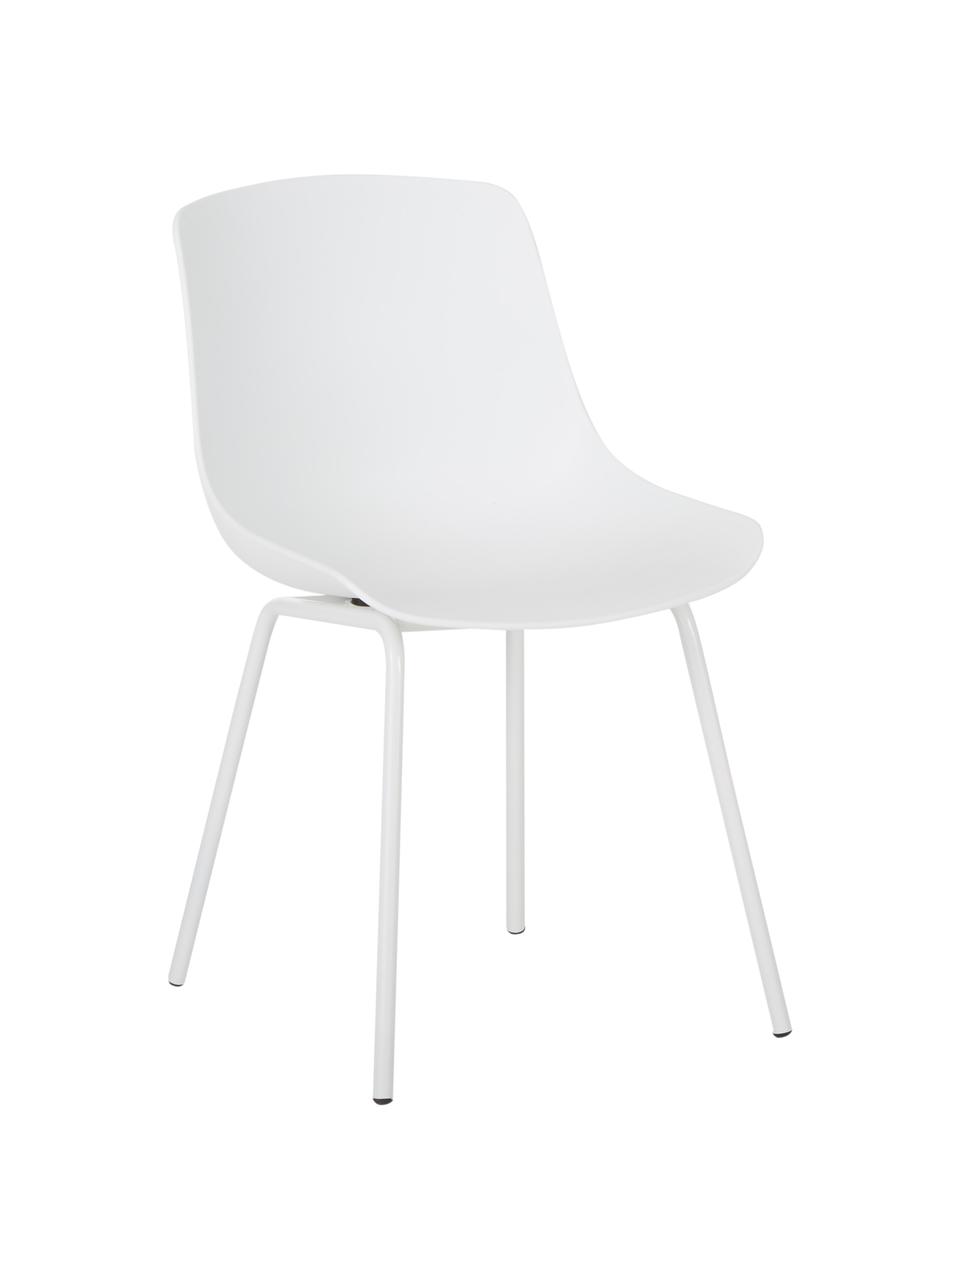 Chaise moderne blanche Joe, 2 pièces, Blanc, larg. 46 x prof. 53 cm